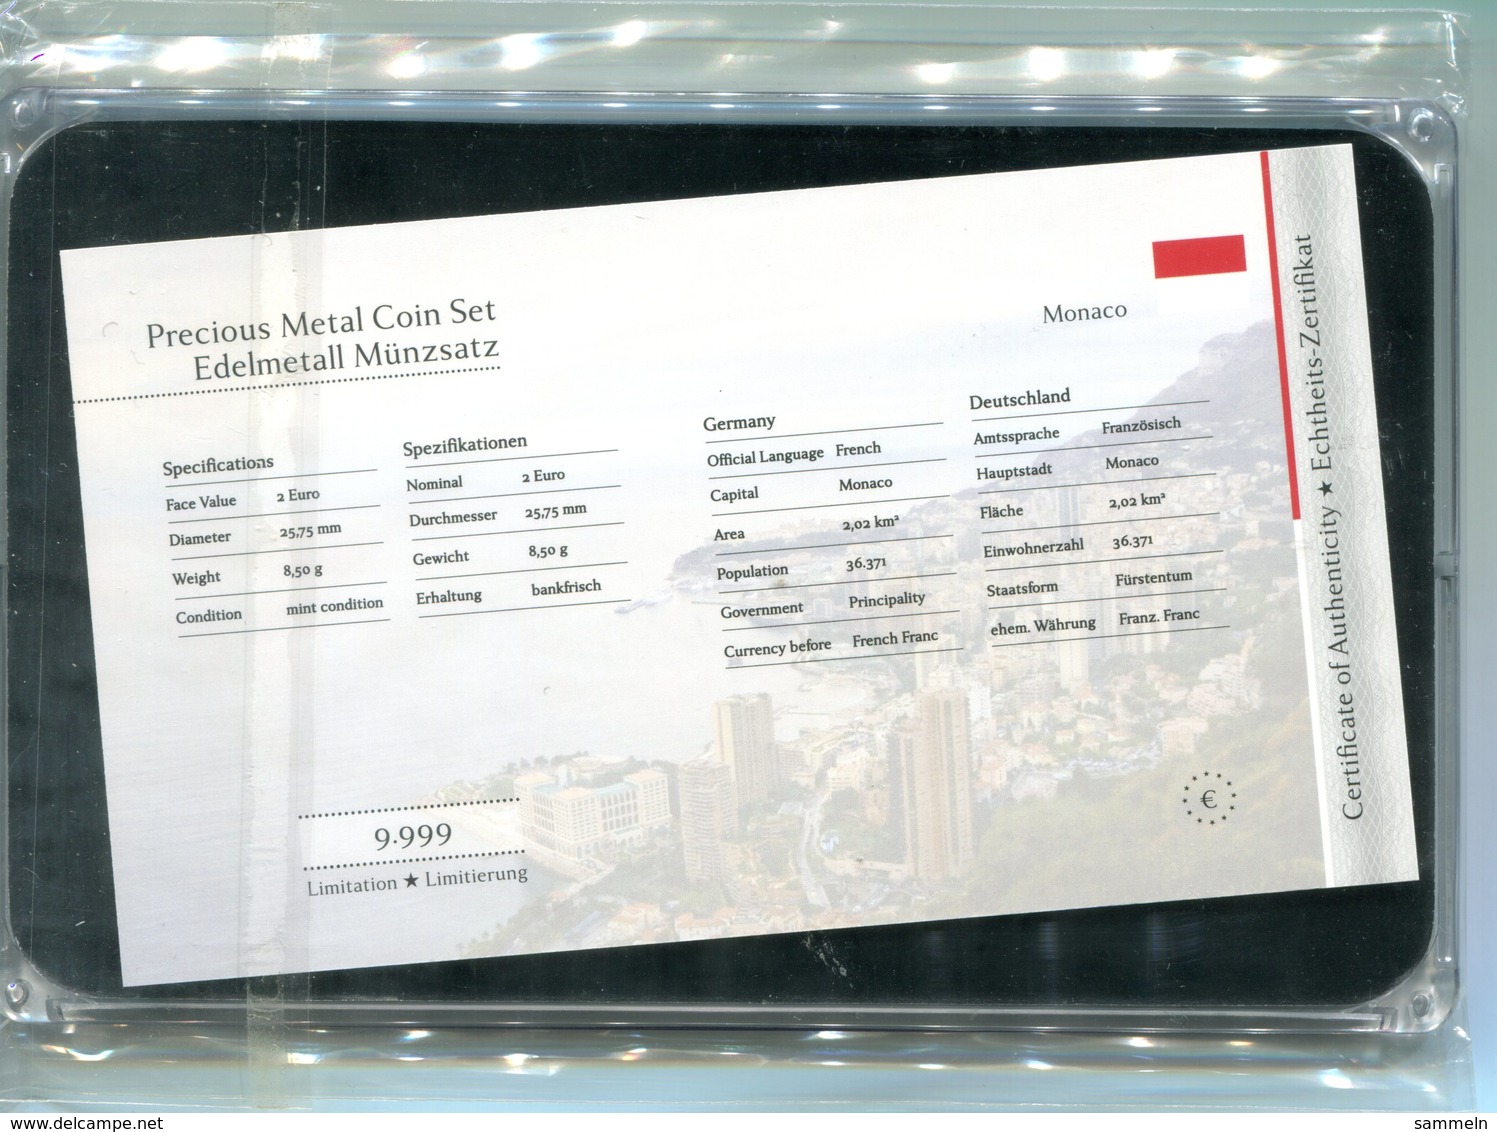 4410 - MONACO 2012 - 4mal 2 Euro Price Albert II - In Rotgold, Gelbgold, Ruthenium Und Platin - OVP - Monaco